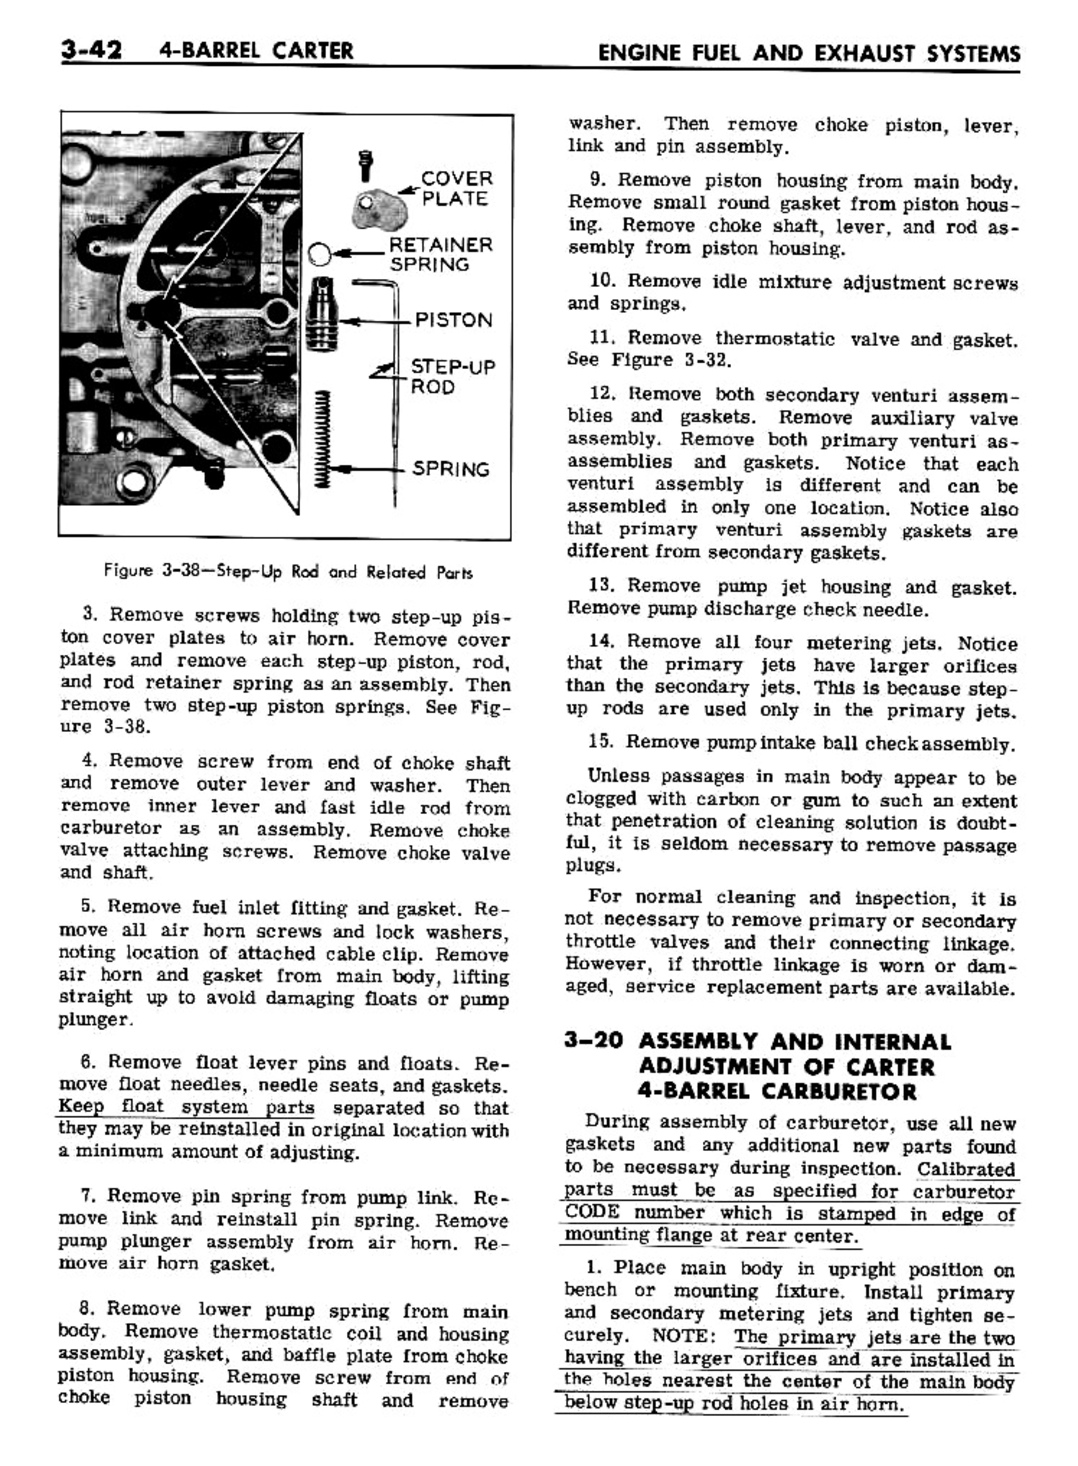 n_04 1961 Buick Shop Manual - Engine Fuel & Exhaust-042-042.jpg